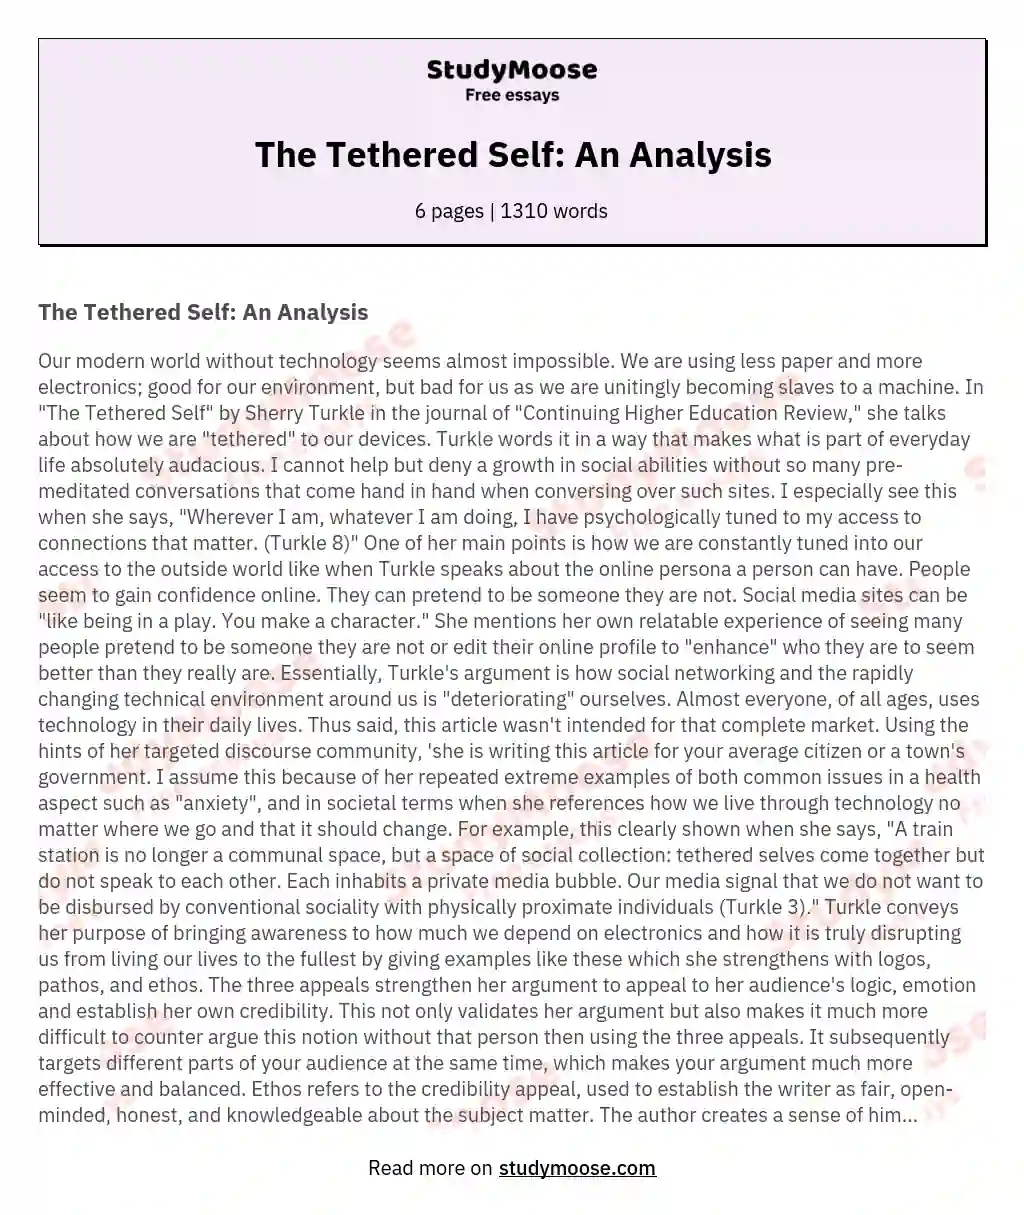 The Tethered Self: An Analysis